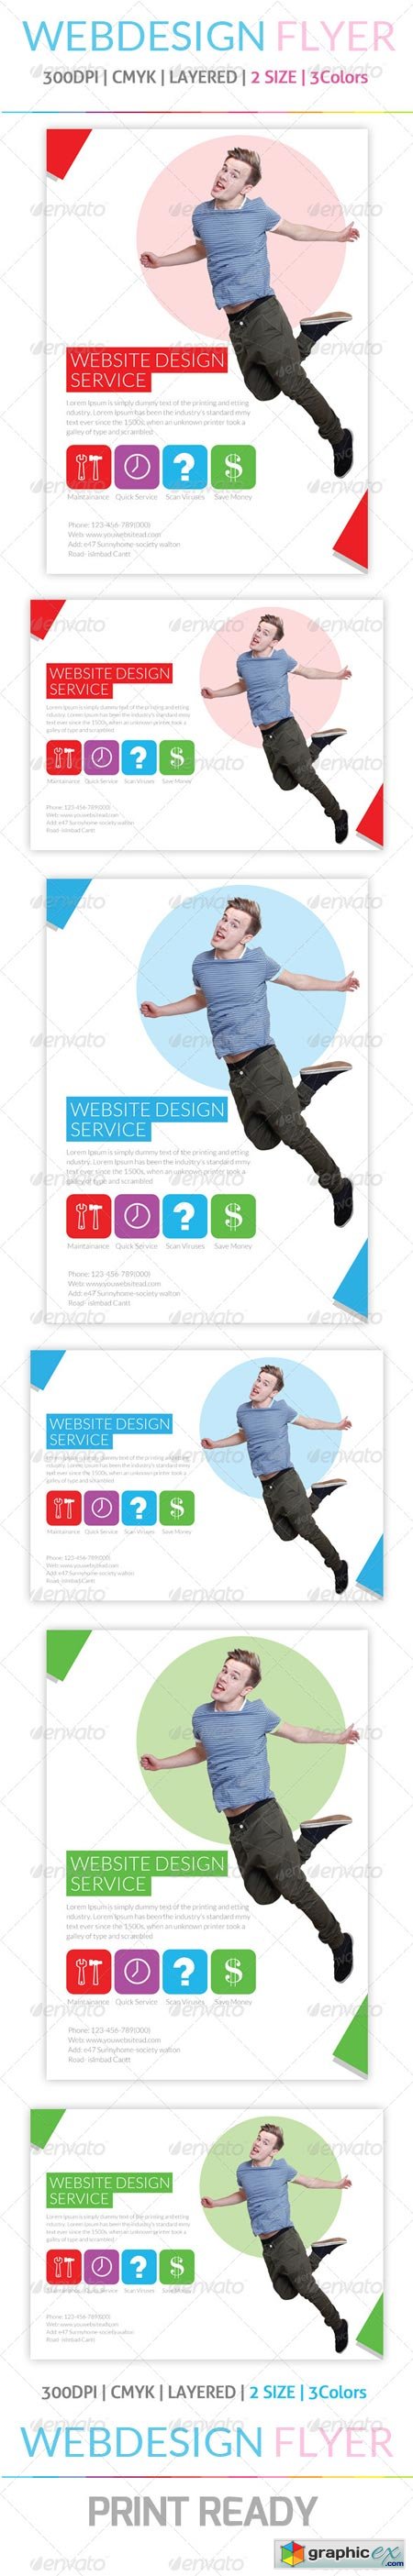 Web Design Flyer & Ad Template 6222762